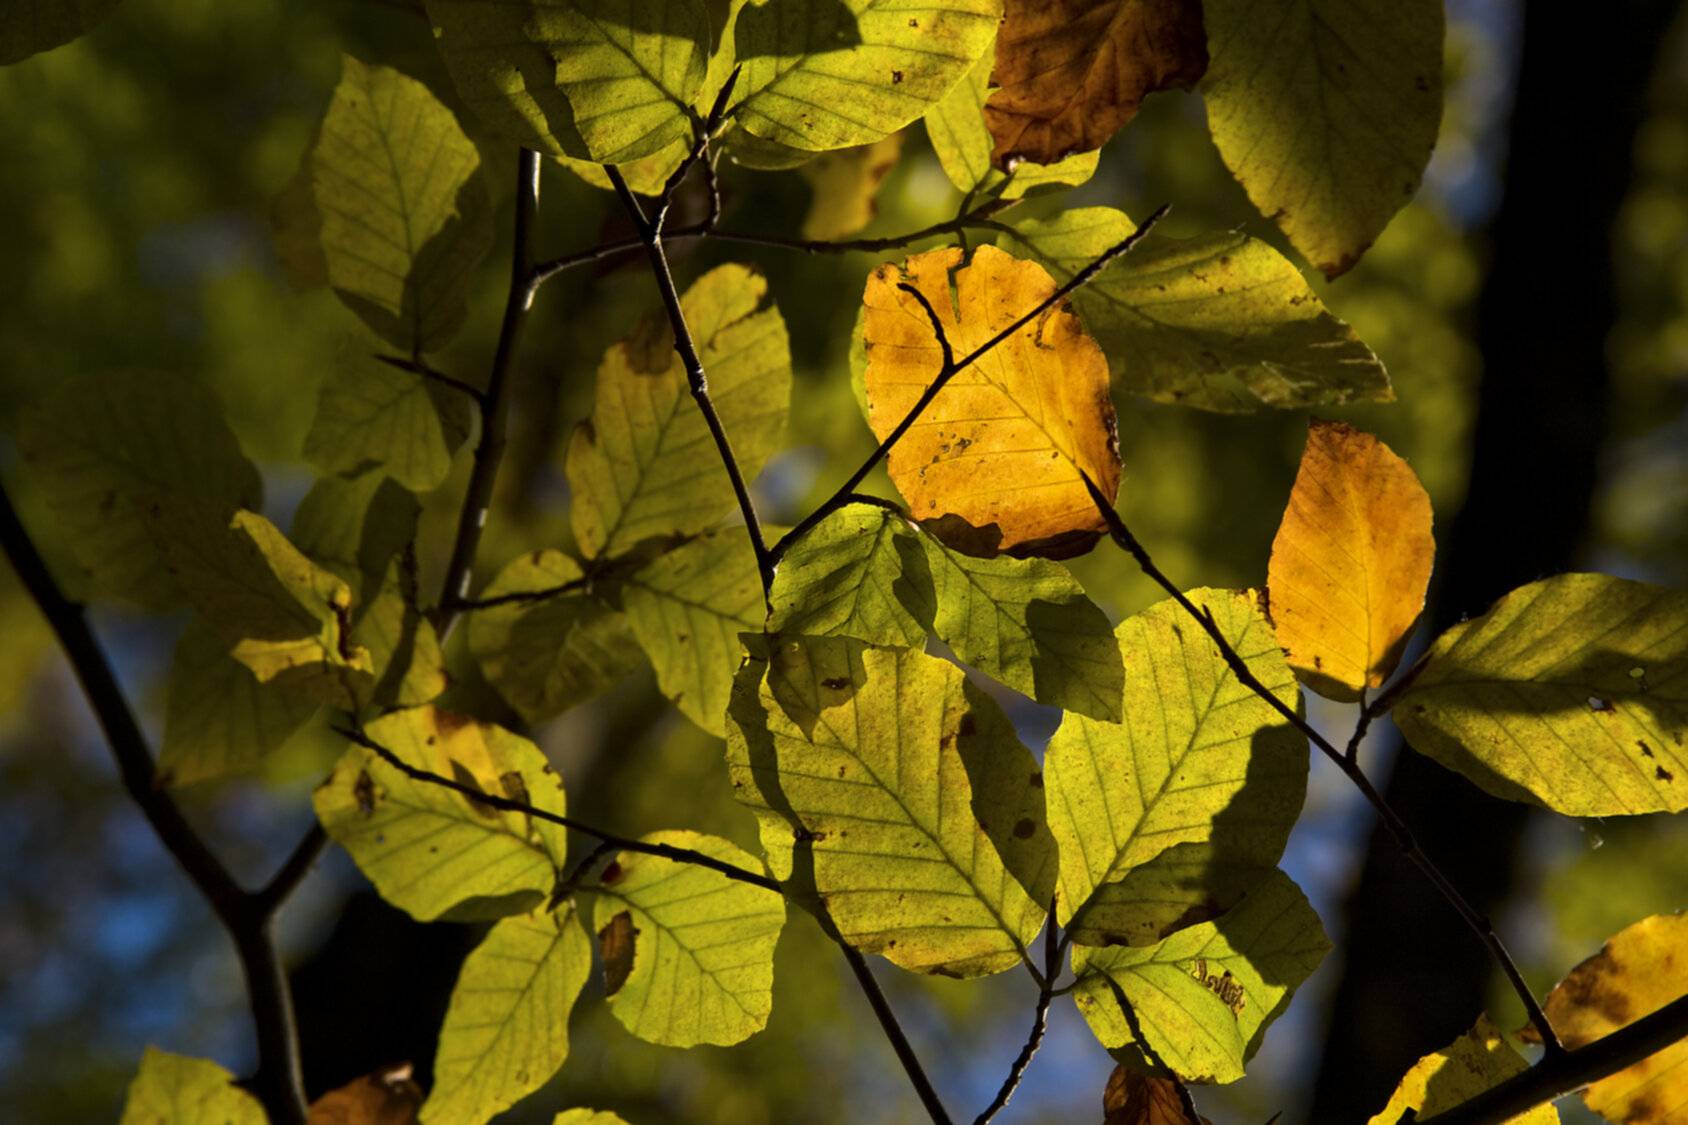 Detail of leaves in ochre tones